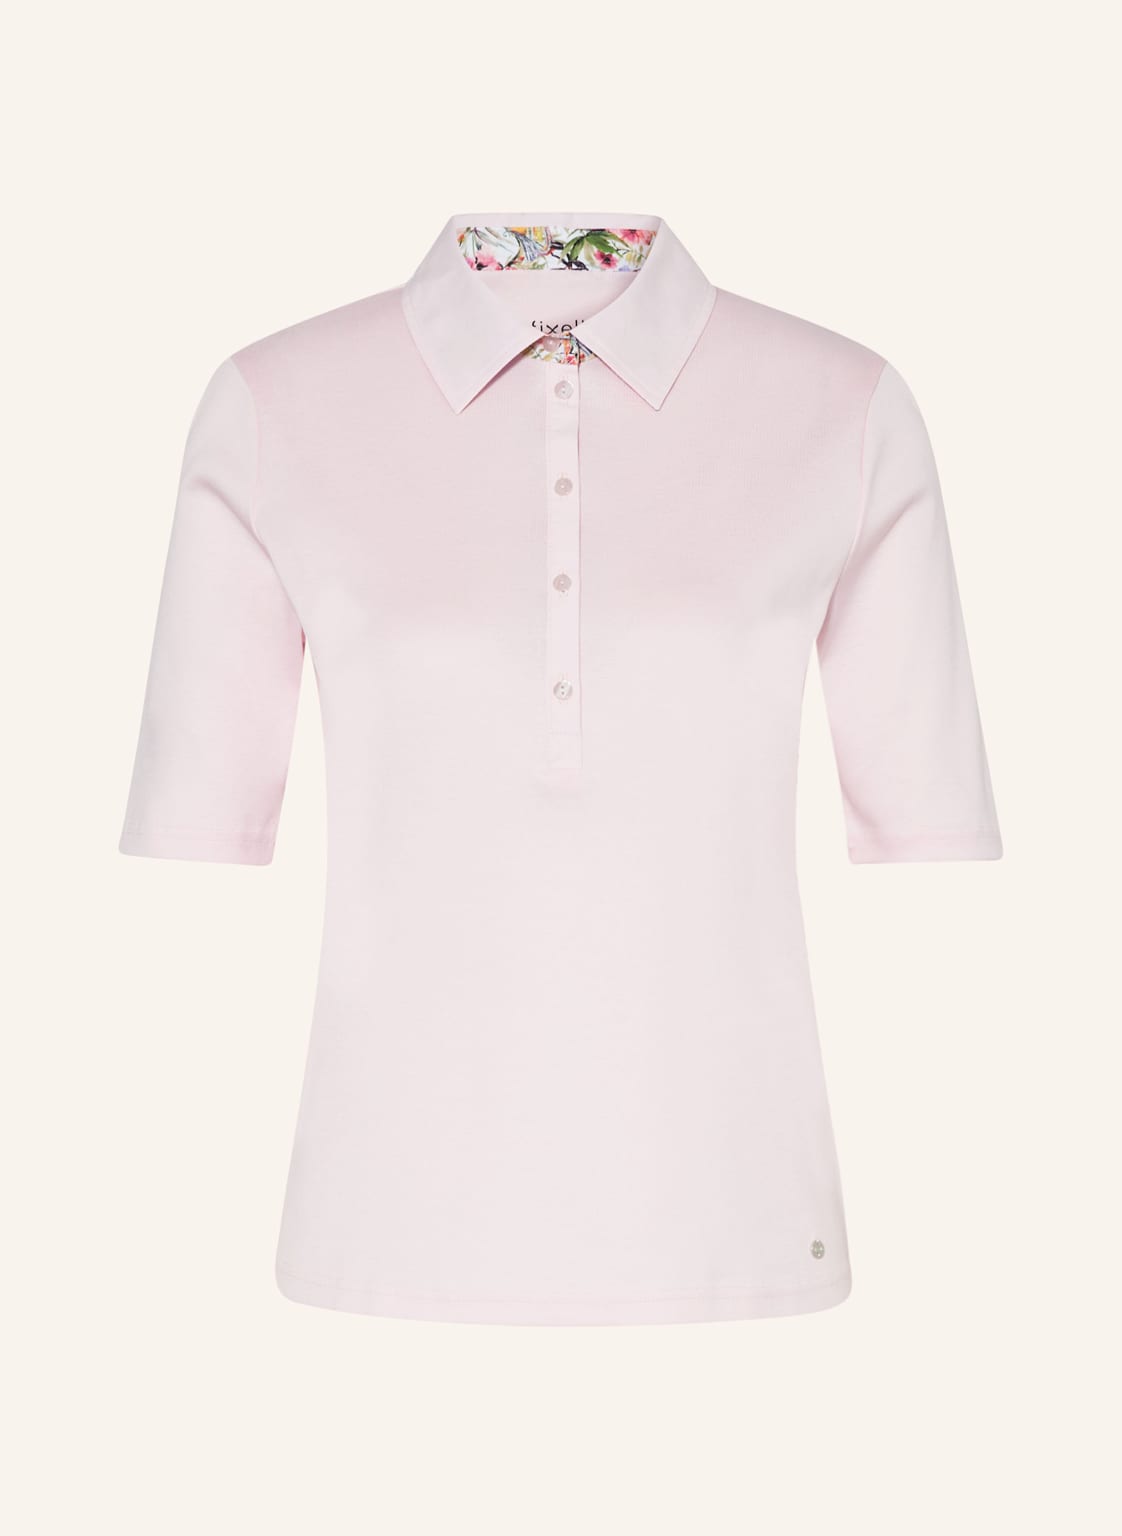 Efixelle Jersey-Poloshirt rosa von efixelle